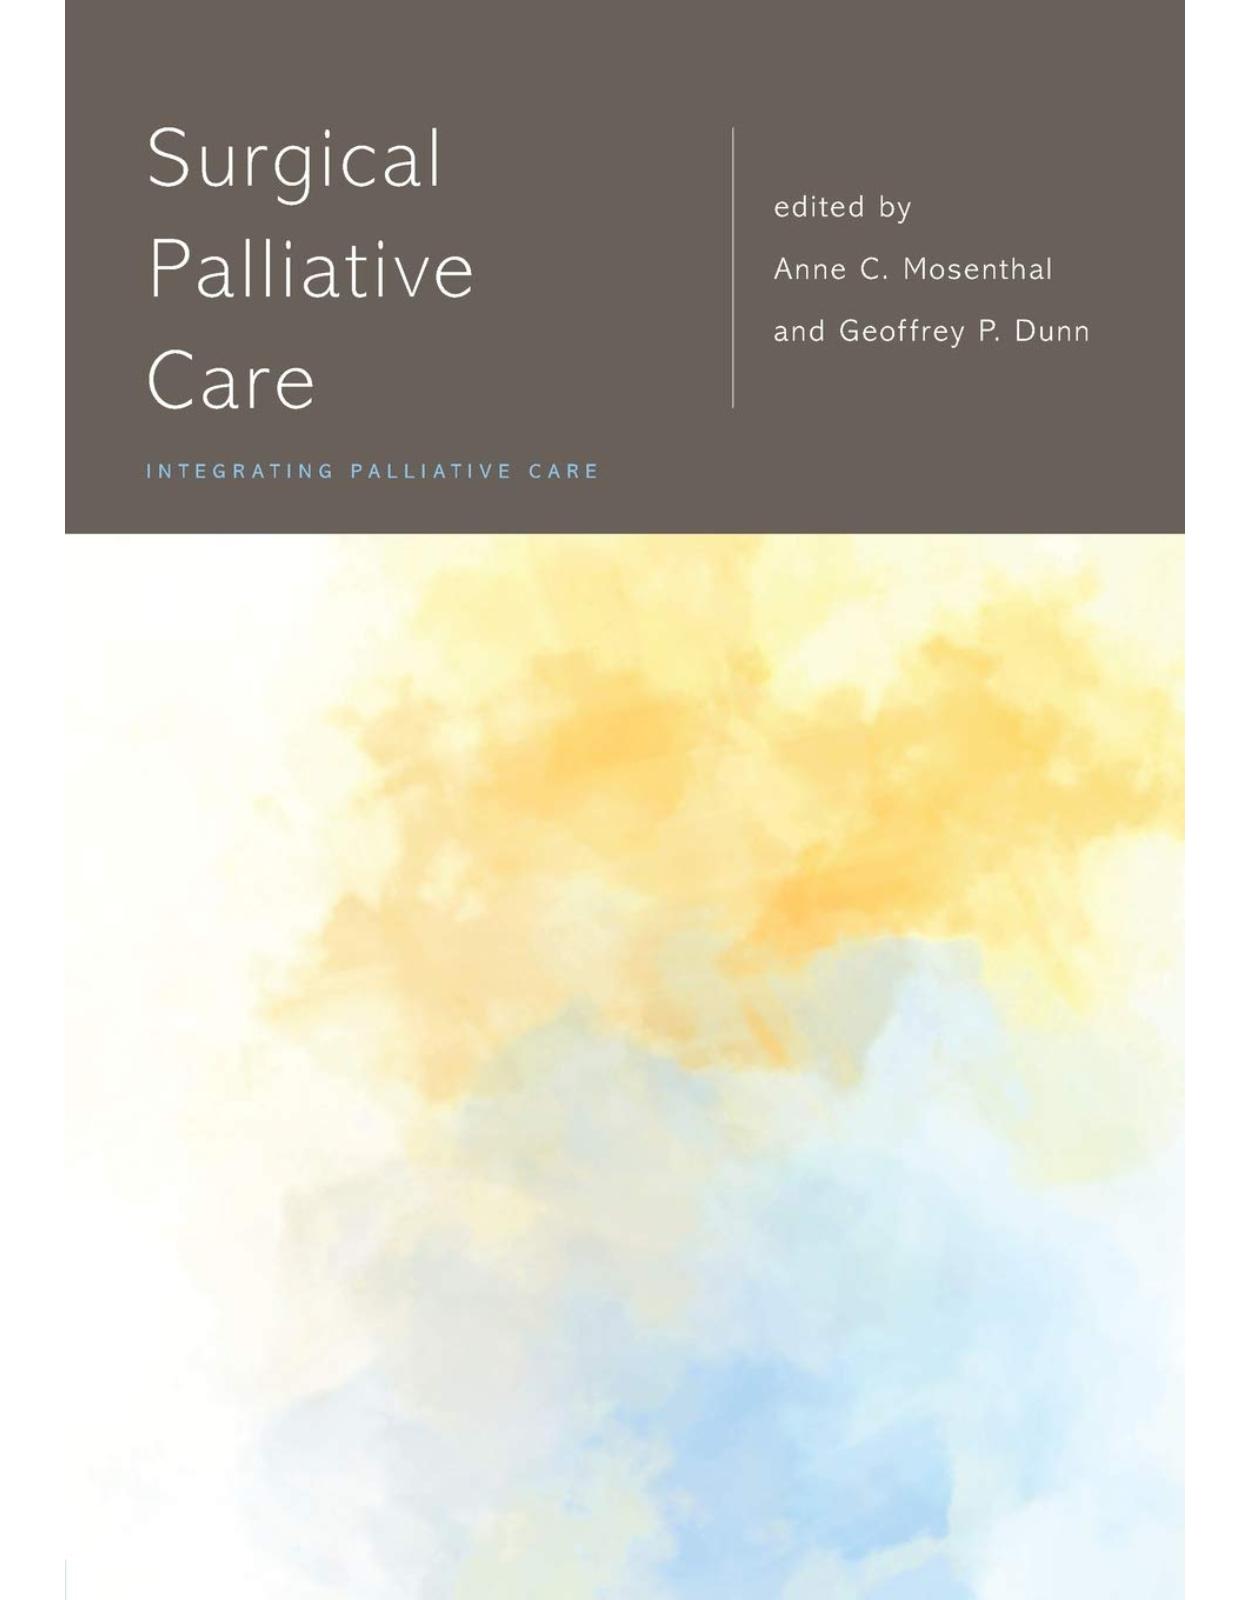 Surgical Palliative Care